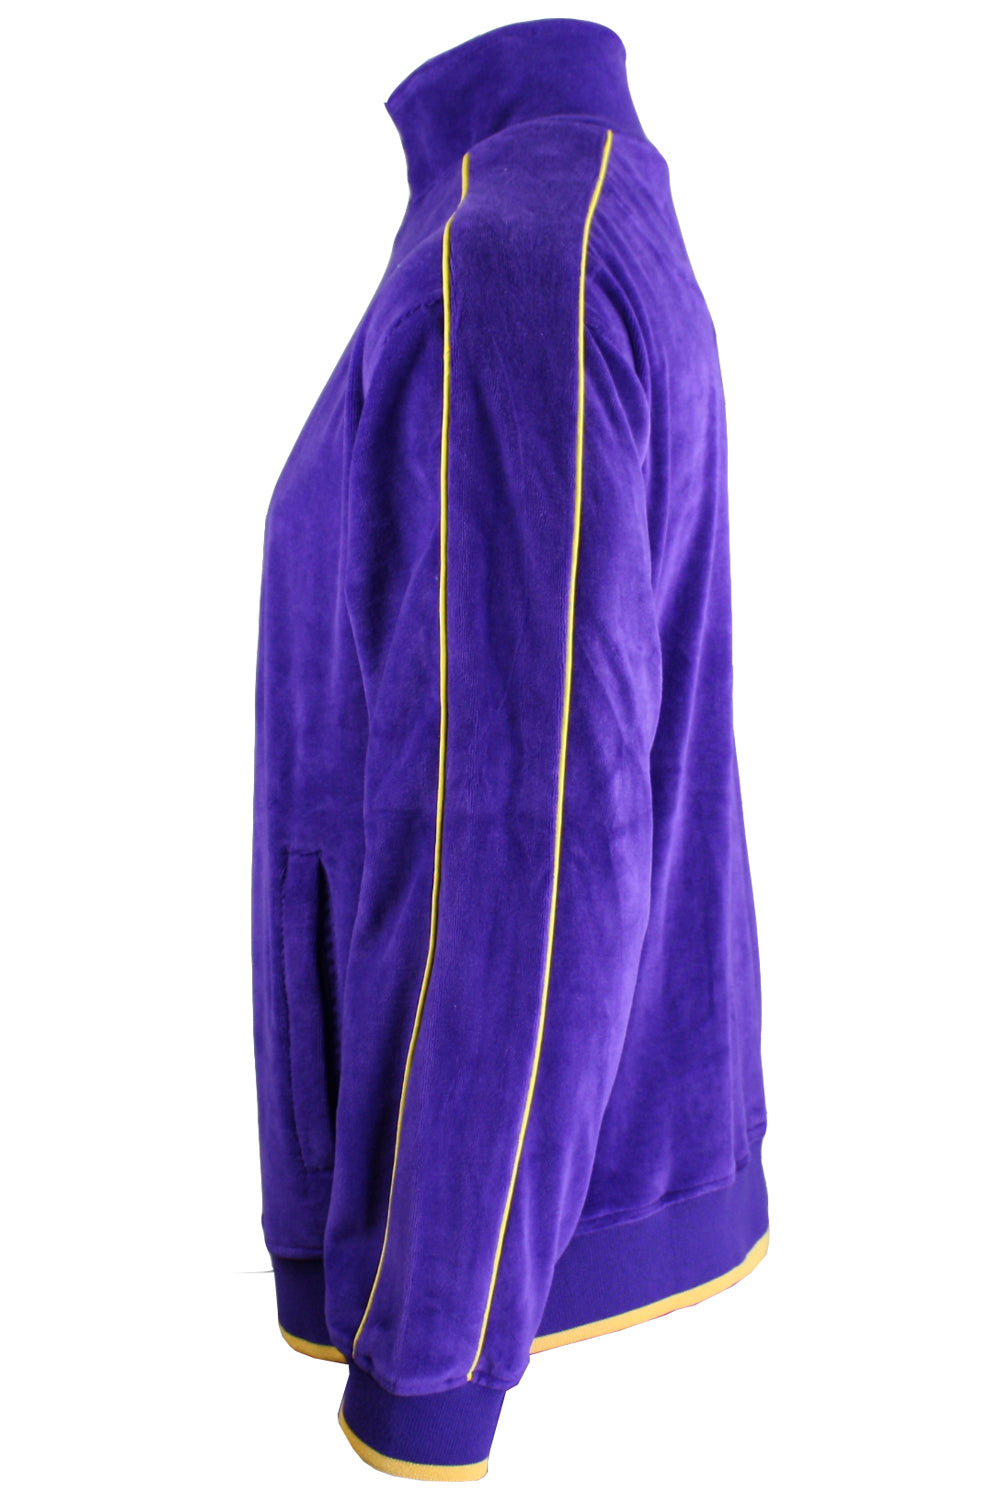 Simonton Says Polka Dots Lavender Purple Jacket Size M - 65% off